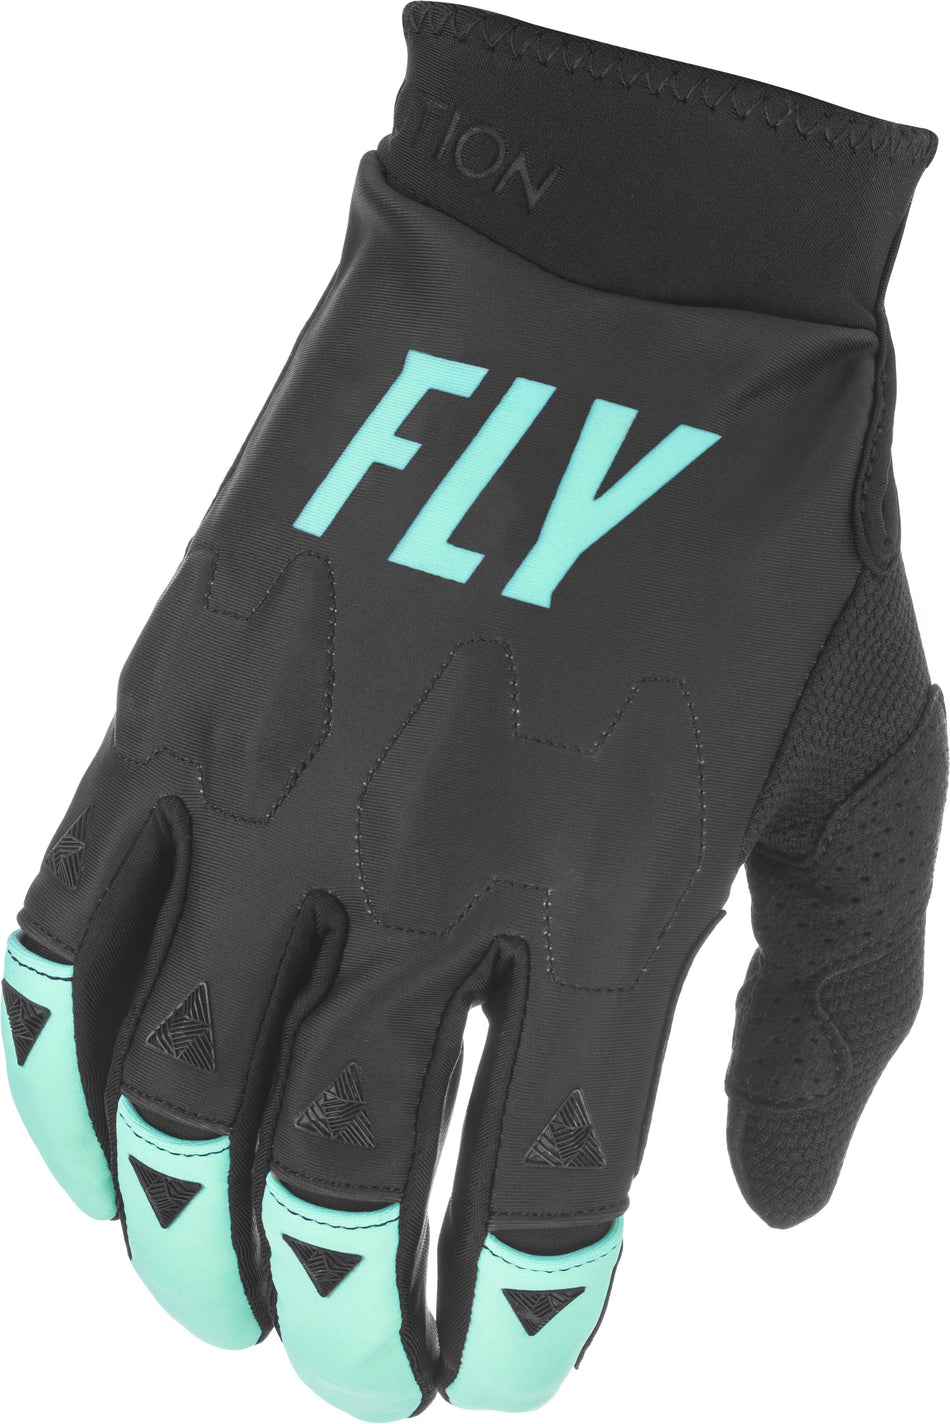 FLY RACING Evolution Dst L.E. Gloves Mint/Black Sz 08 374-11908